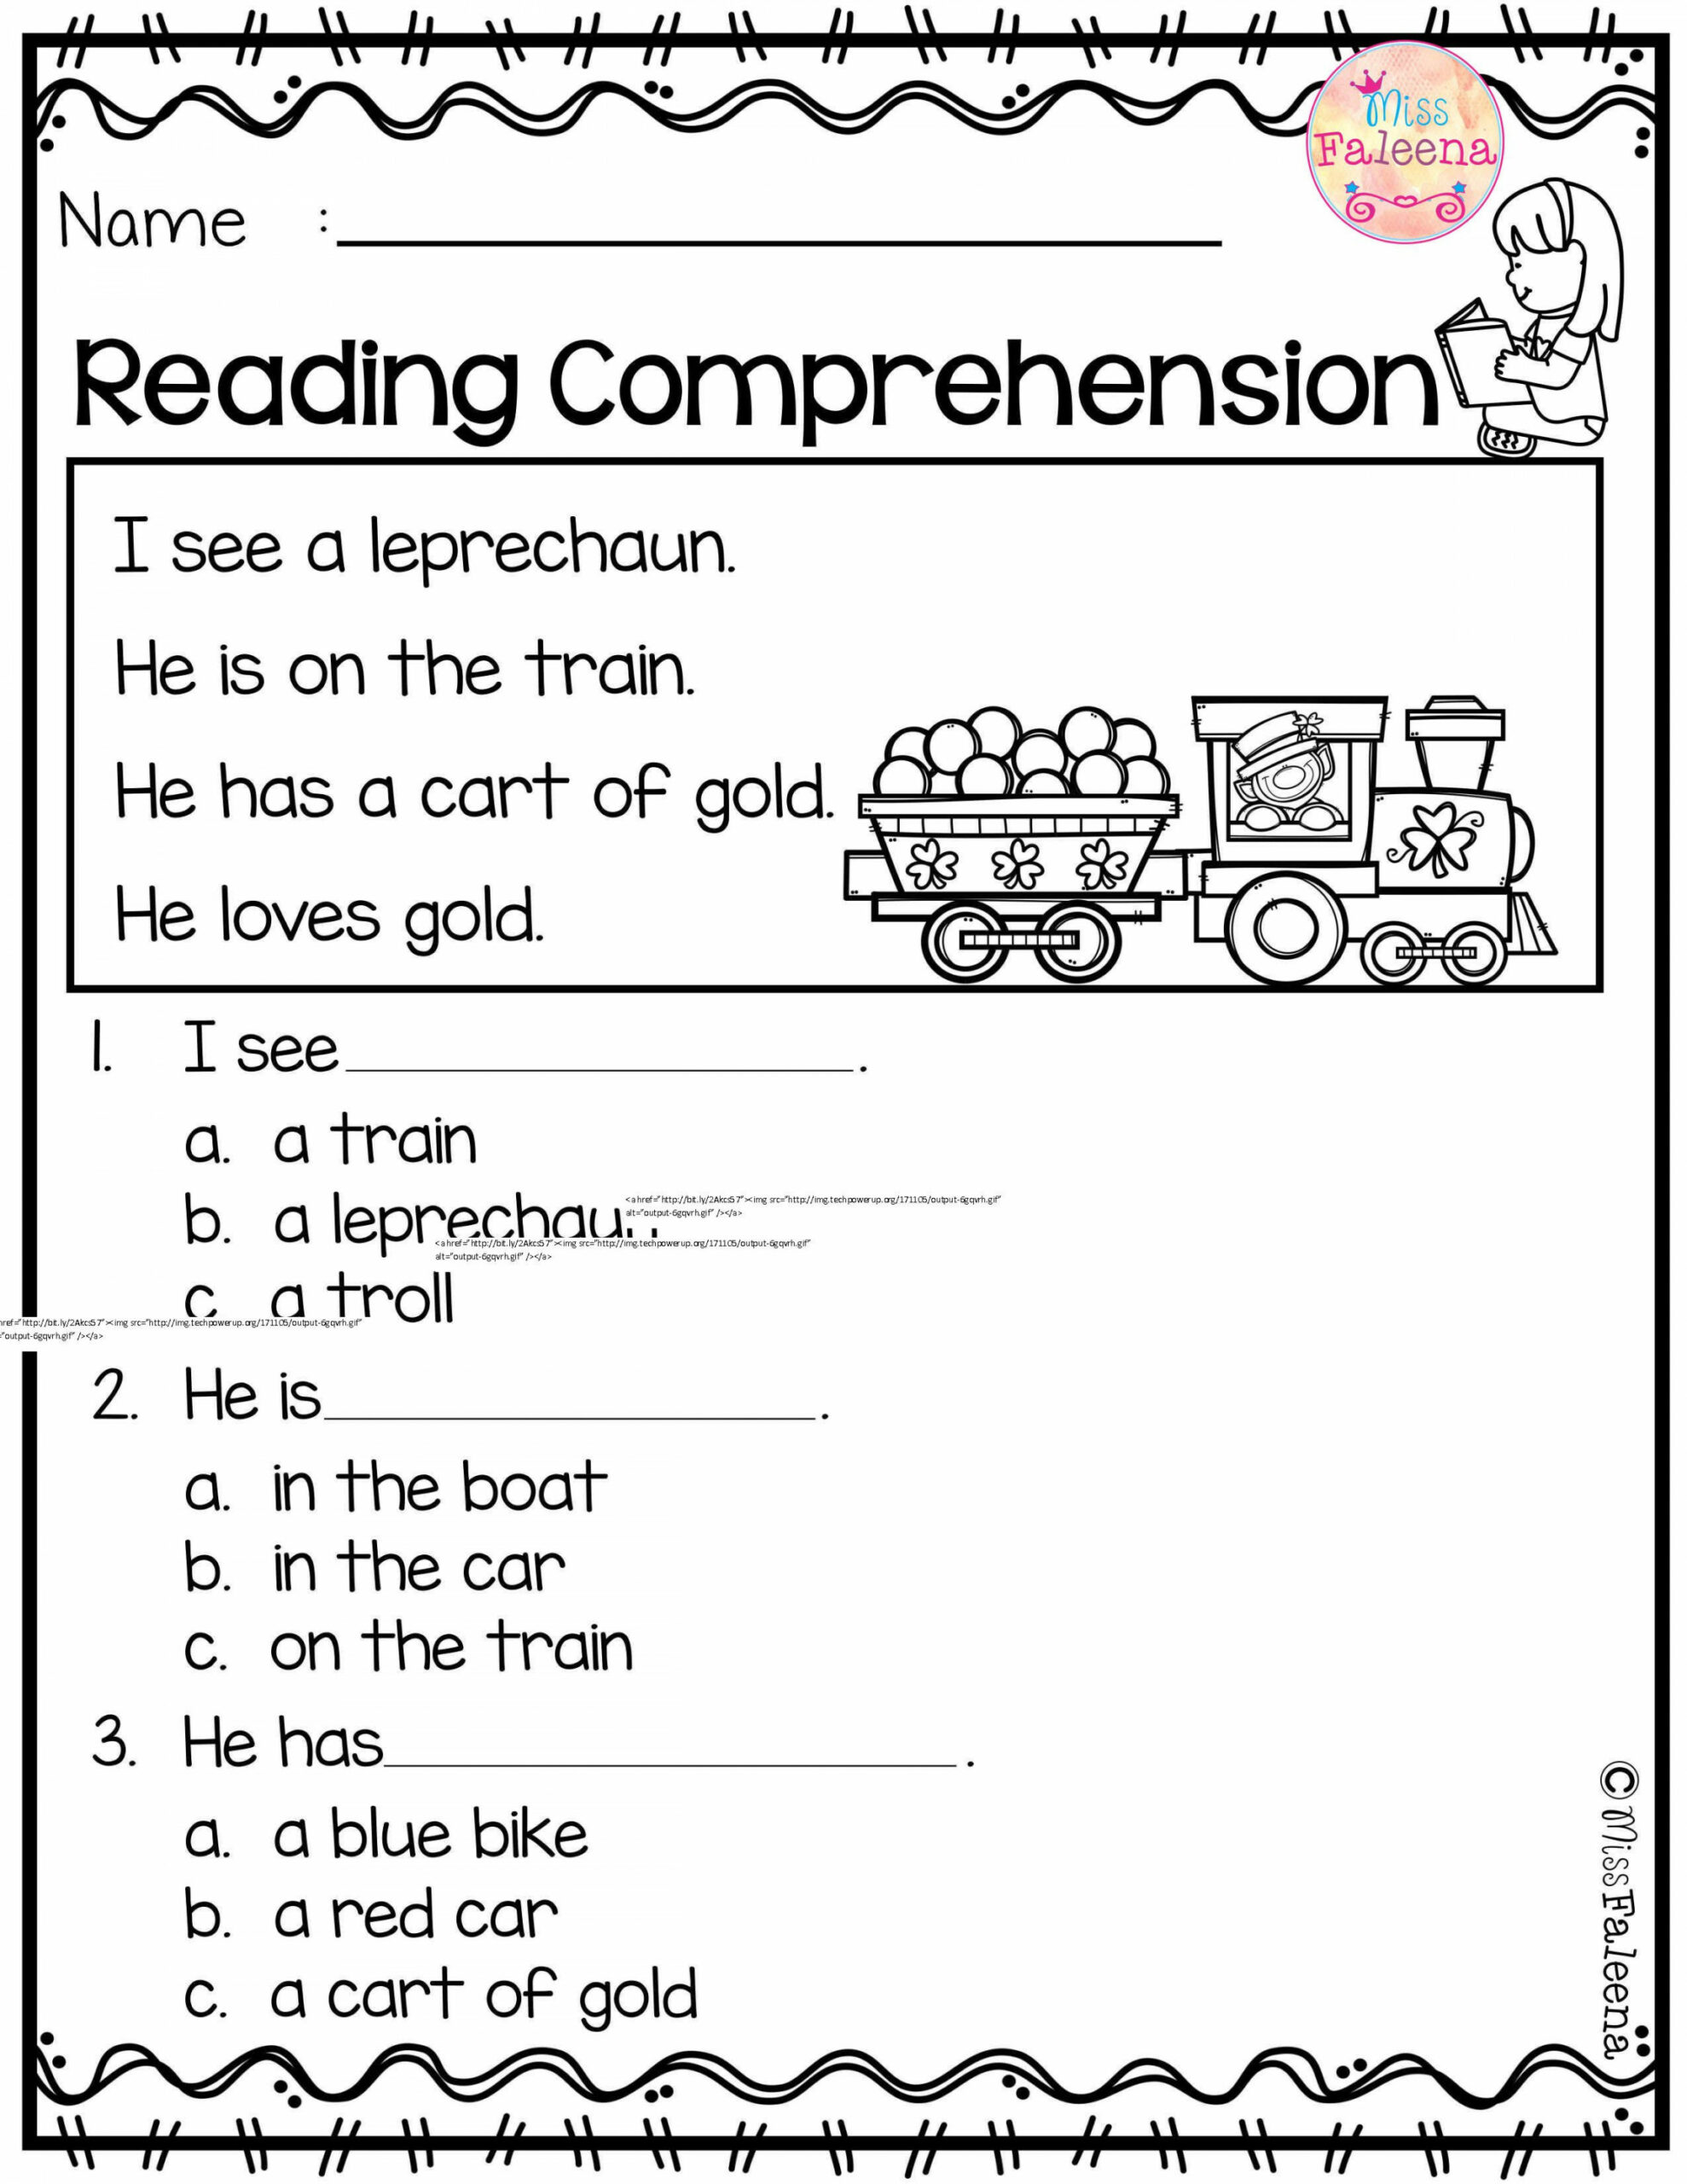 Pin on Kinder Reading Comprehension